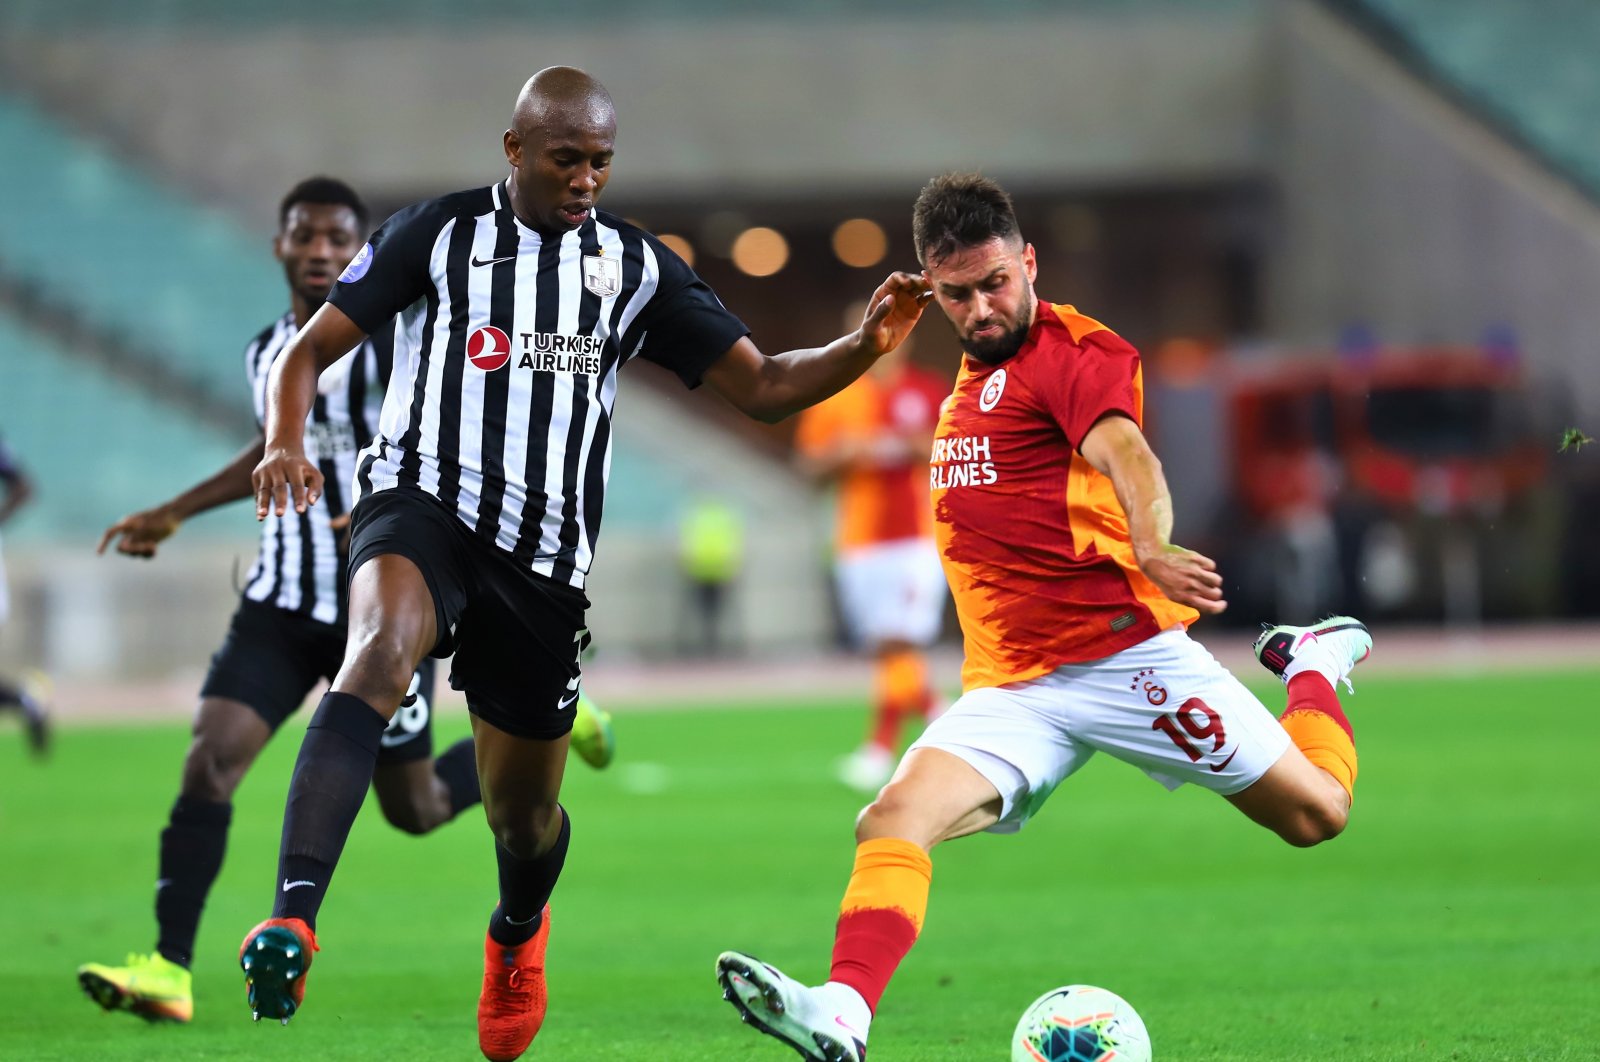 Galatasaray's Ömer Bayram takes a shot during a Europa League match against Neftçi, in Baku, Azerbaijan, Sept. 17, 2020. (AA Photo)